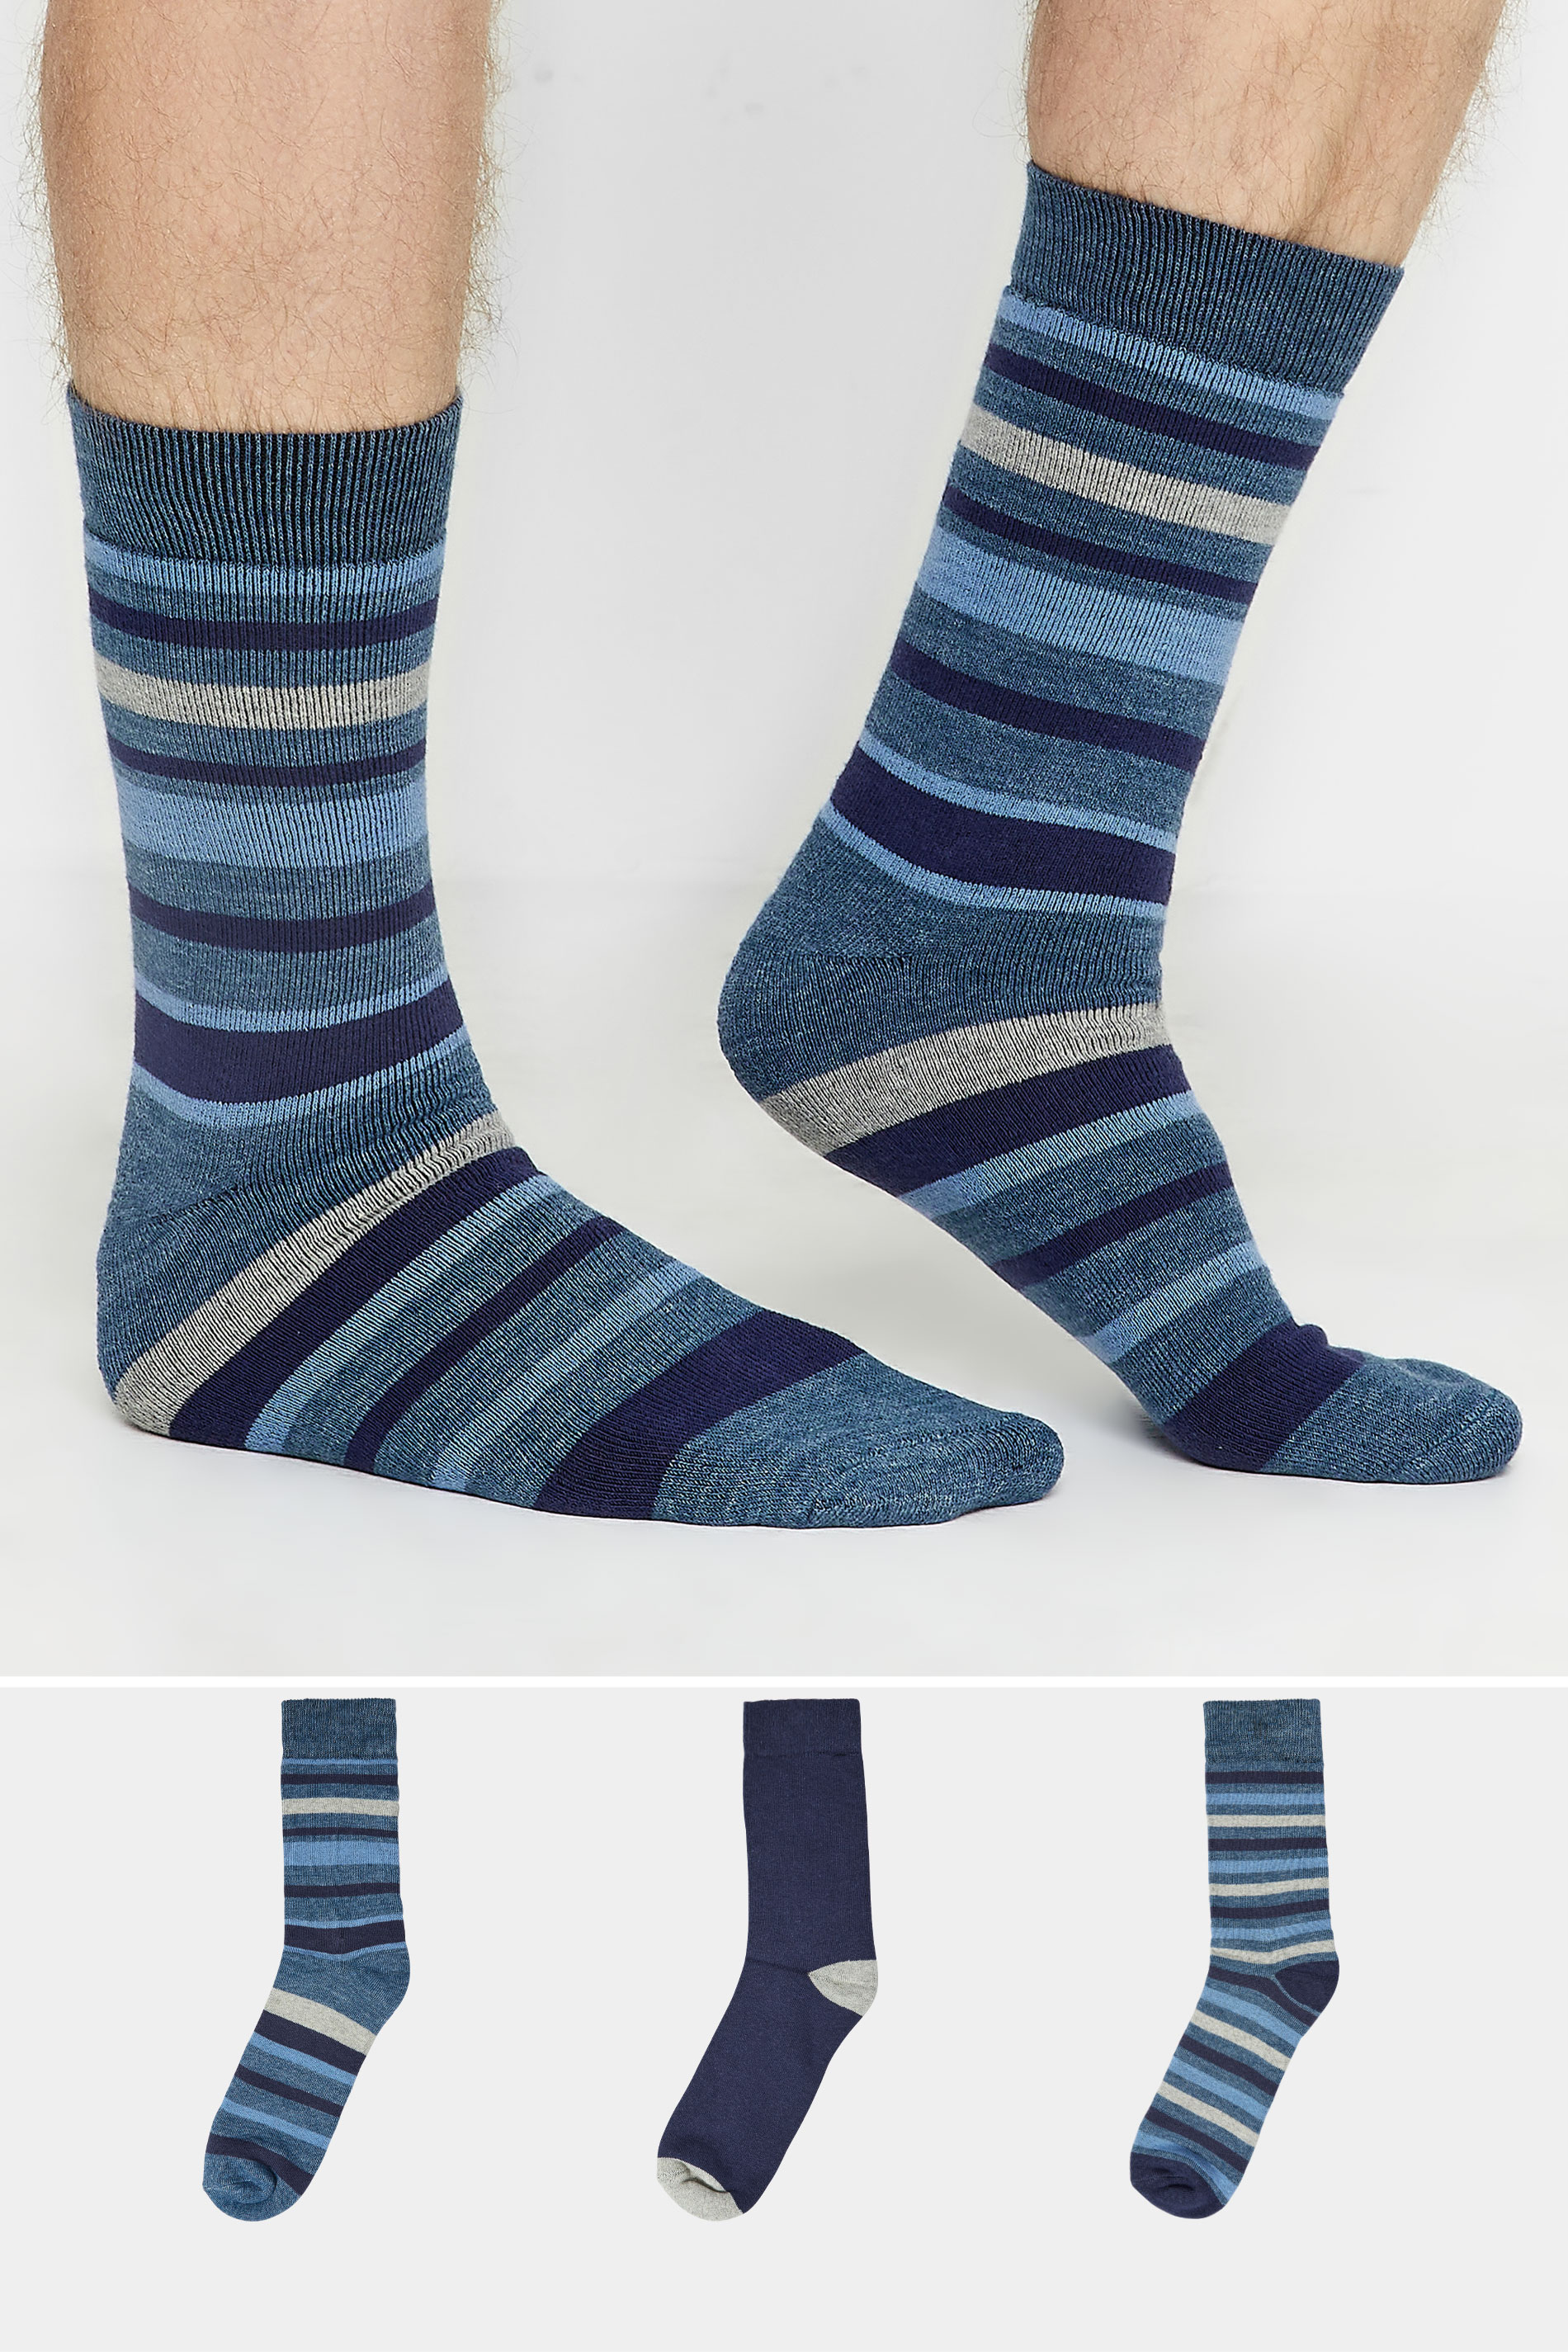 BadRhino Blue Striped 3 Pack Thermal Socks | BadRhino 1